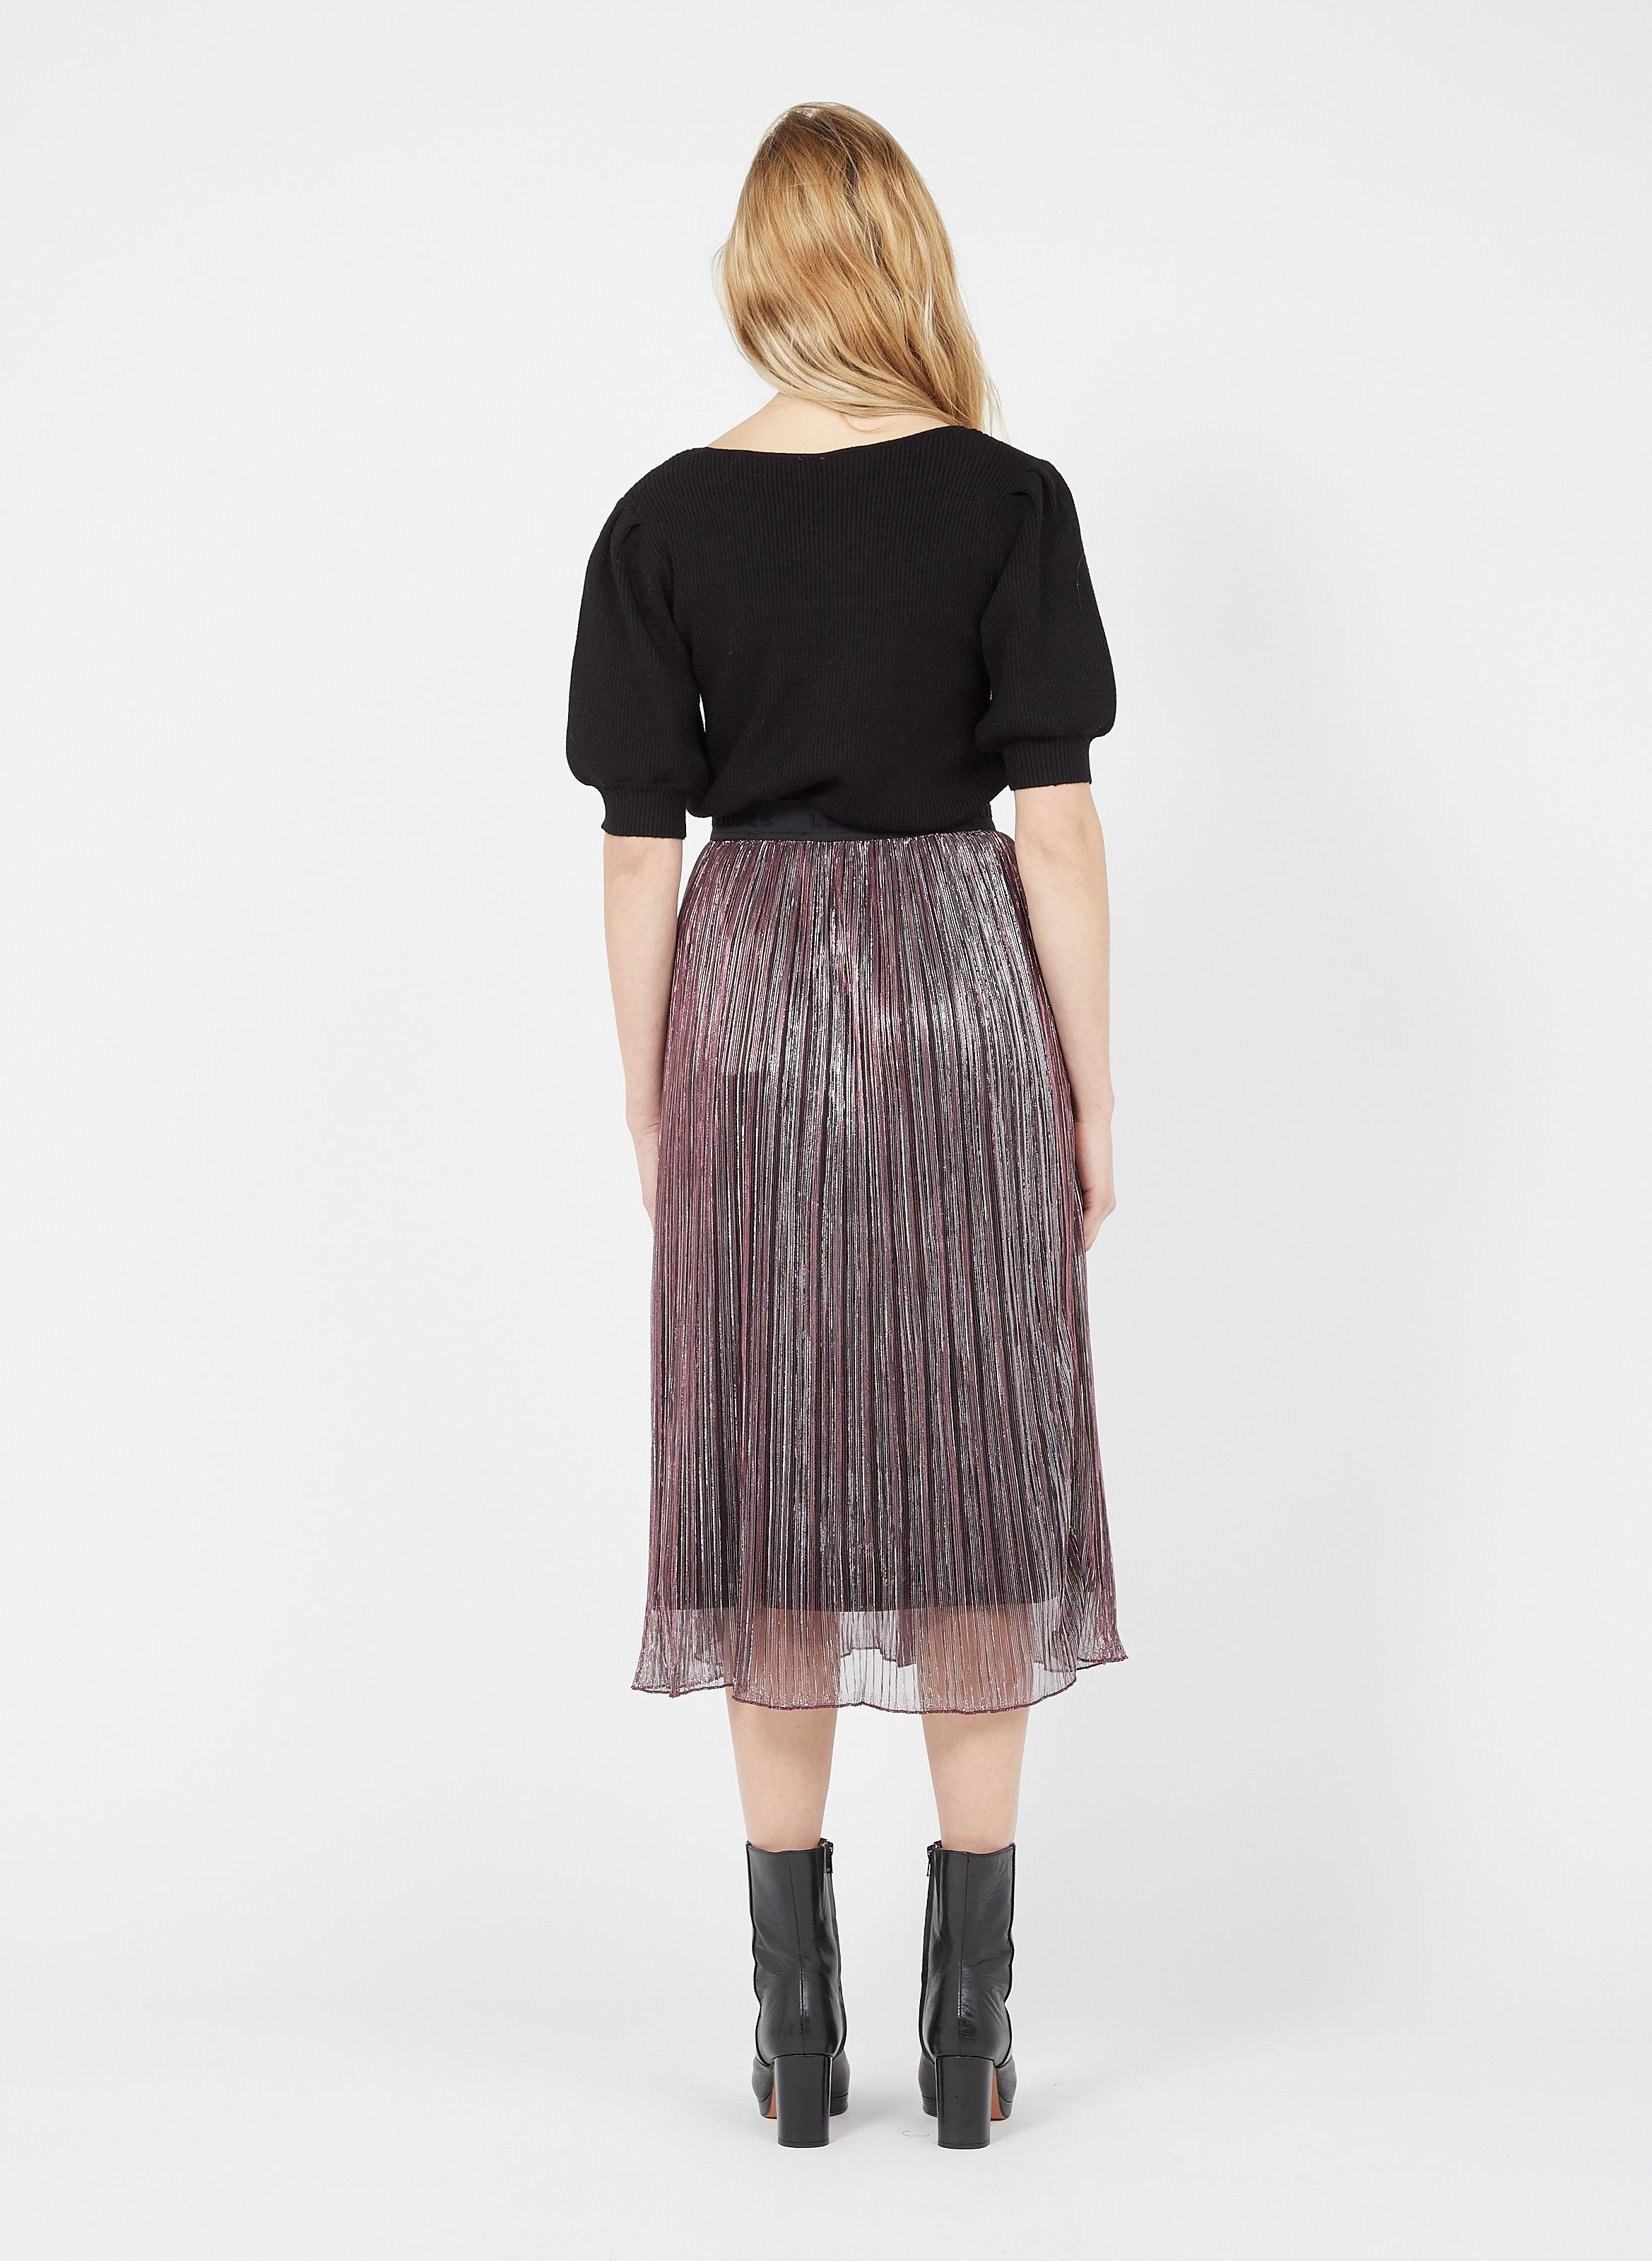 metallic skirt uk